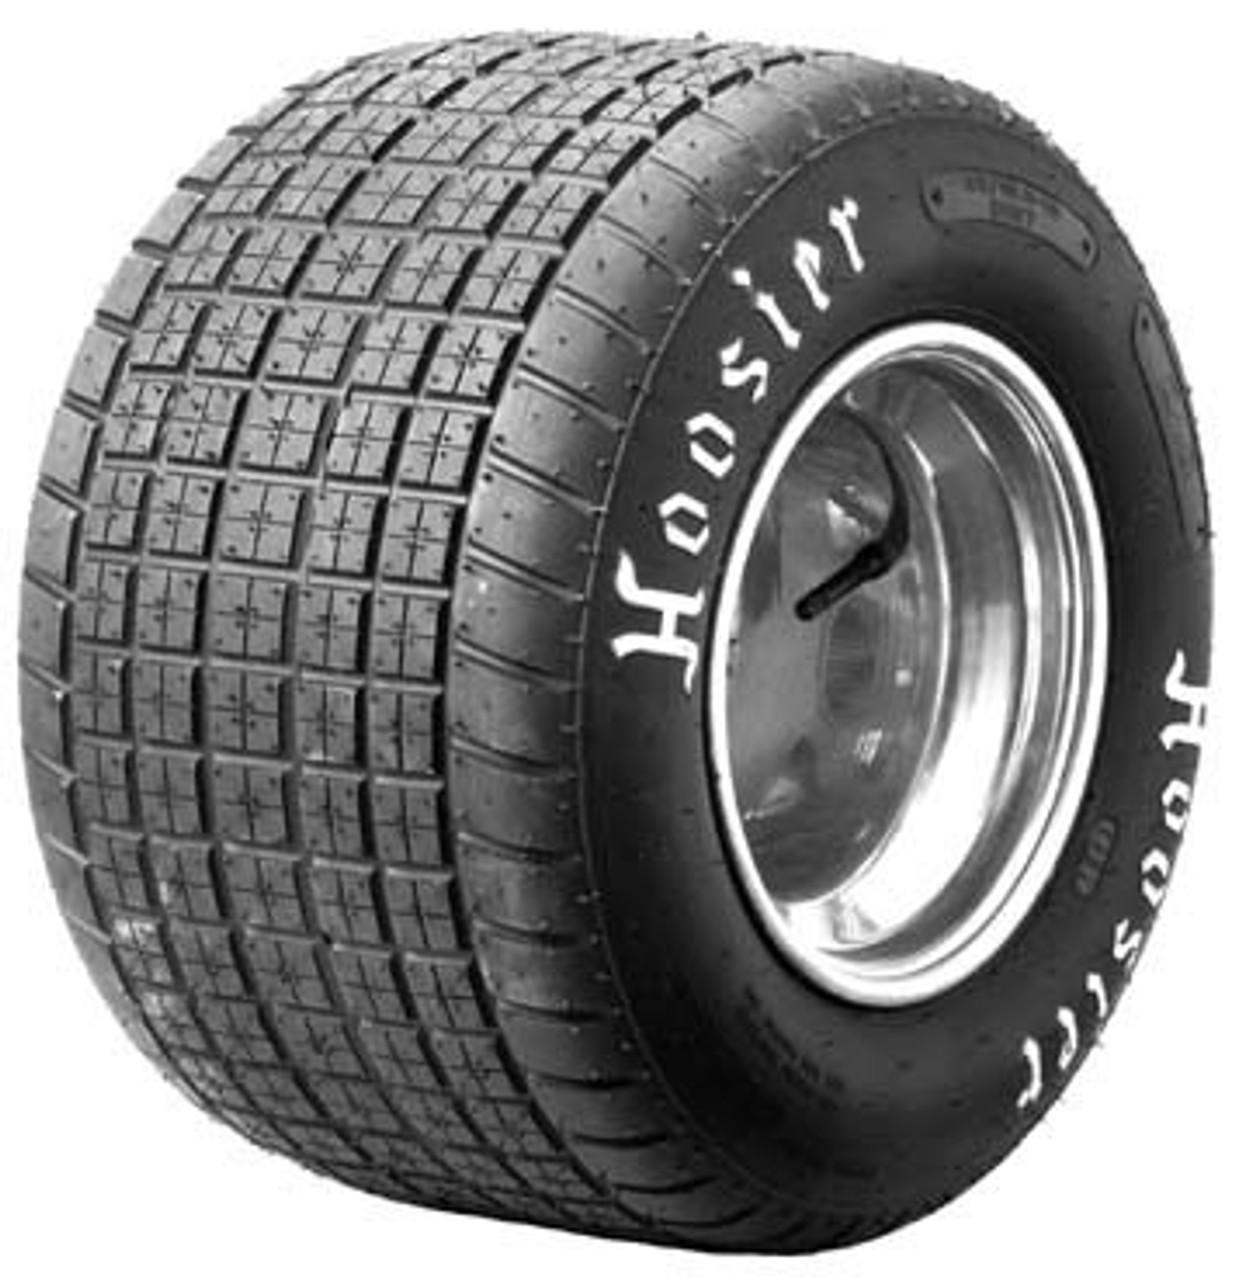 Hoosier Mini Sprint Dirt Tire 62.0 / 10.0-10 RD15 - 42172RD15